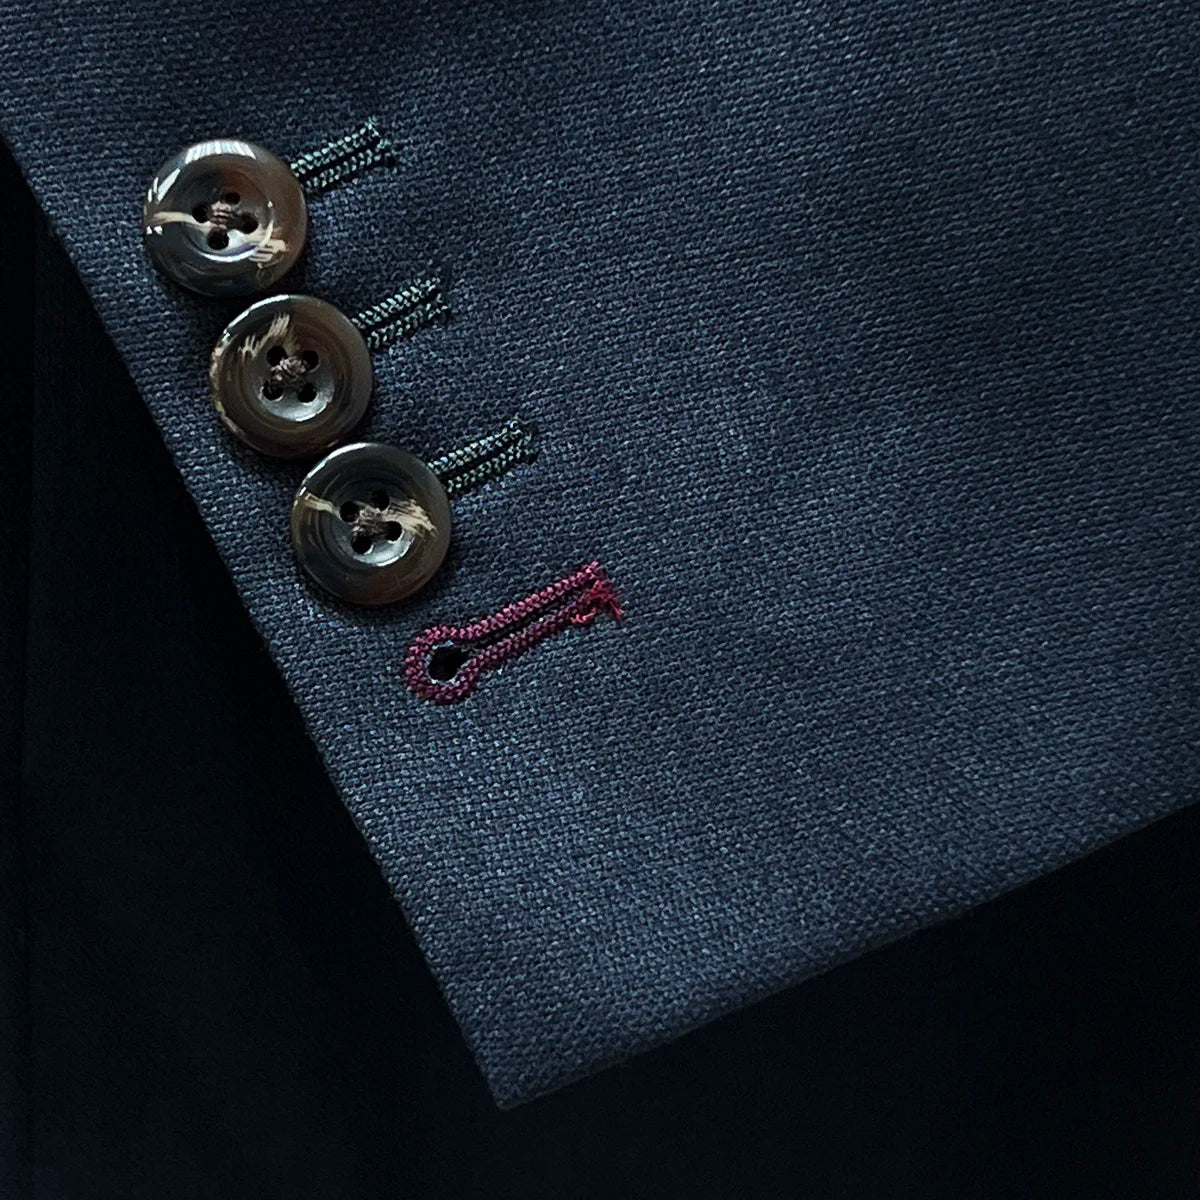 Detail of contrast buttonholes on a grey suit